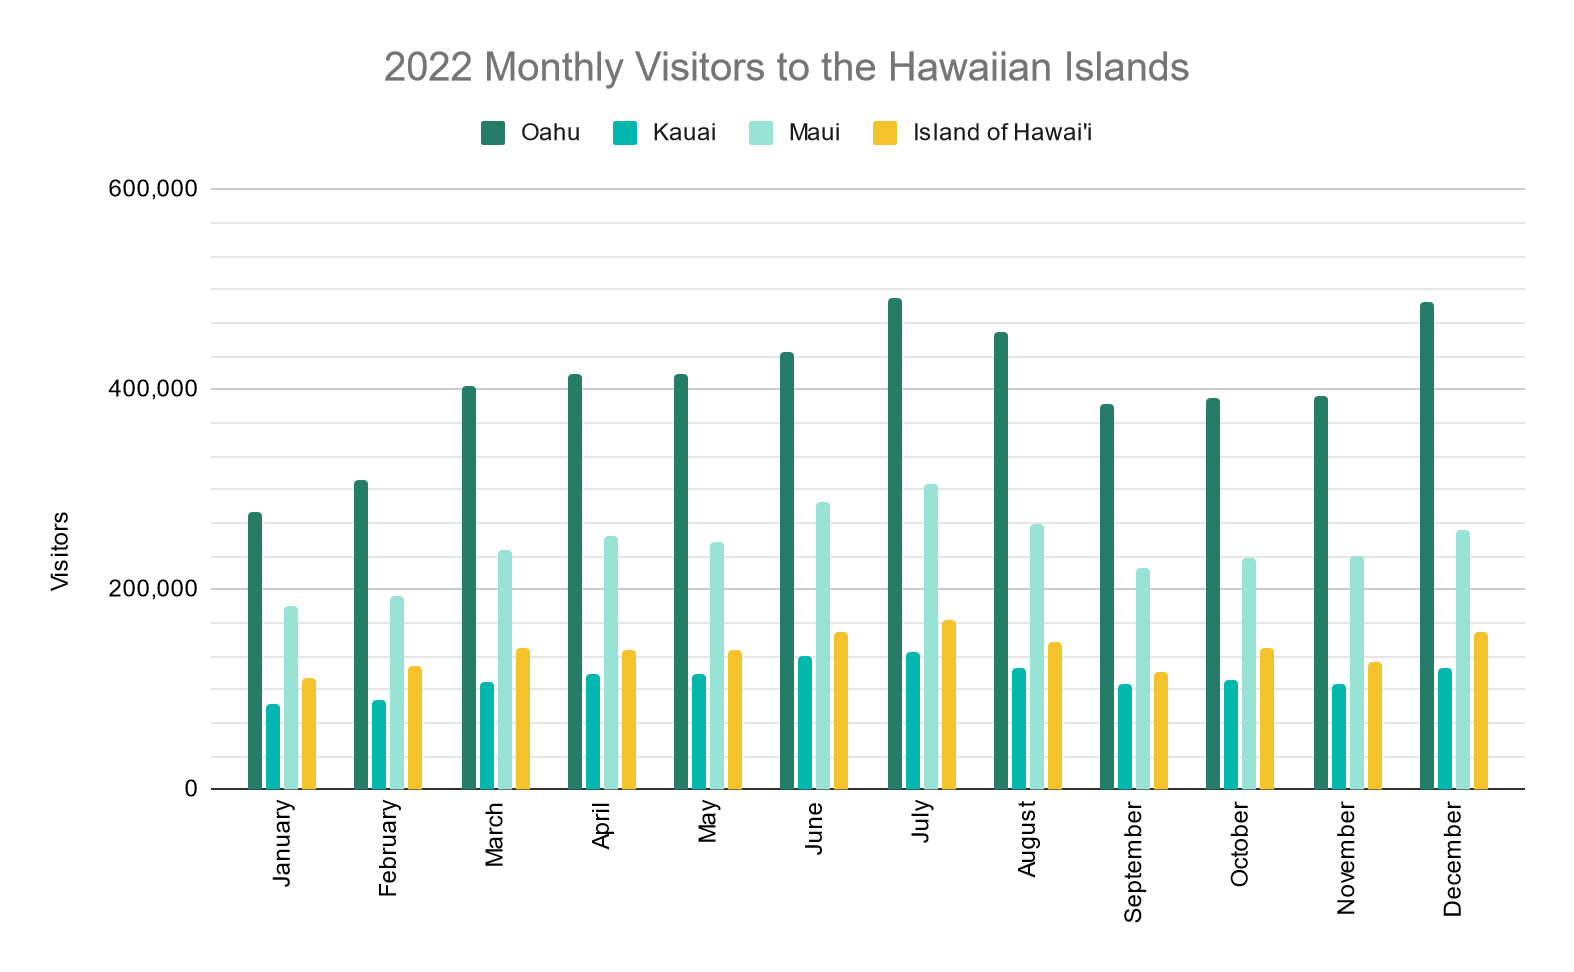 Hawaii in June - 2022 Monthly Visitors